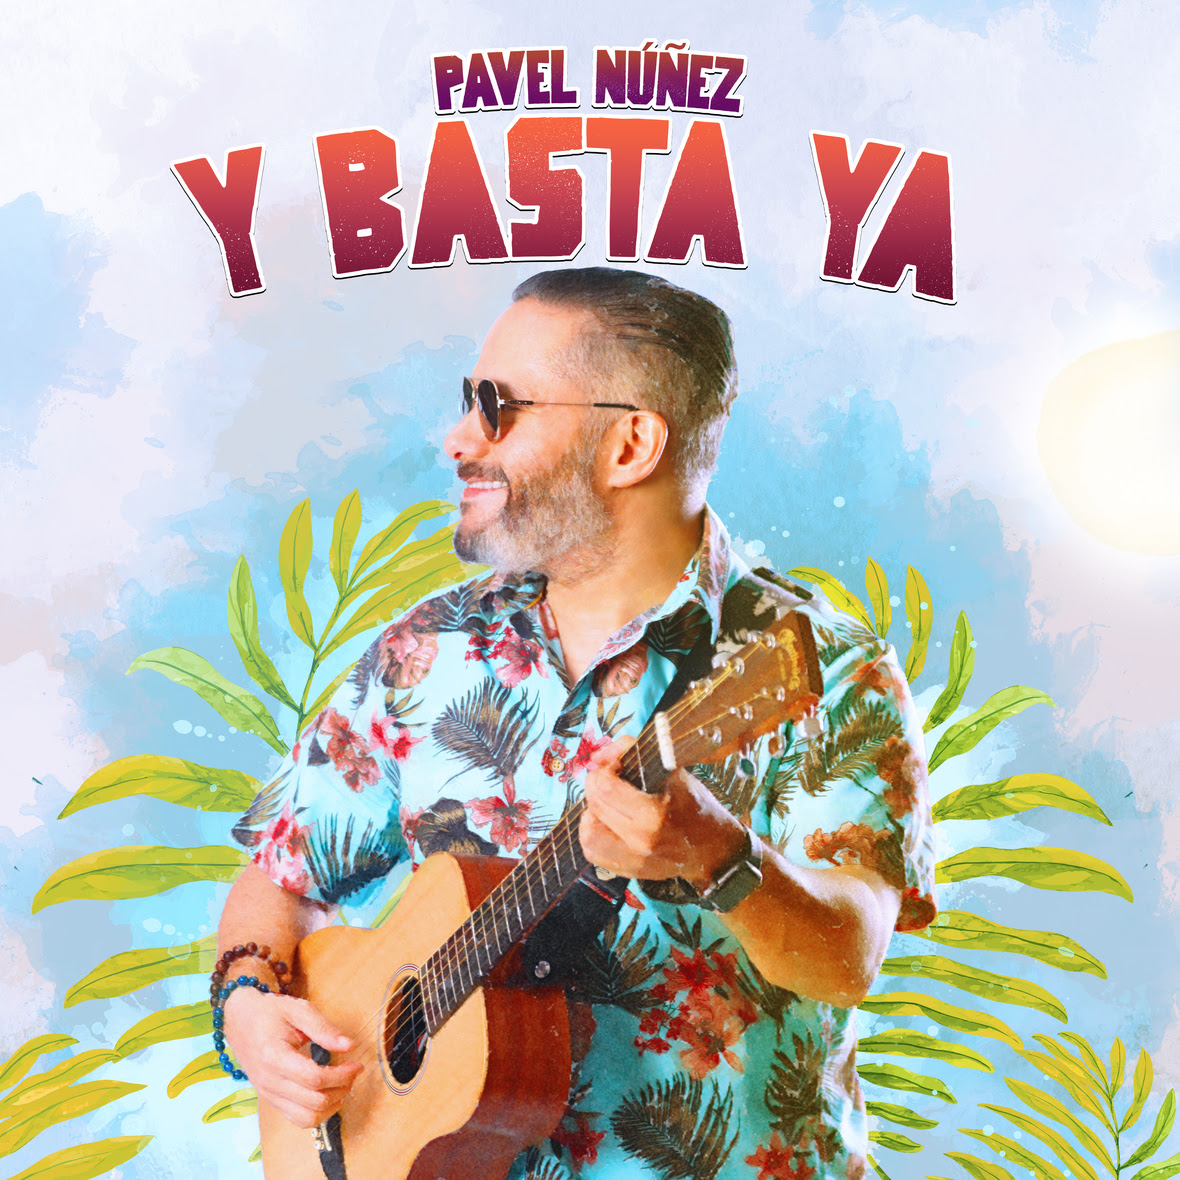 PAVEL NUNEZ - Y Basta Ya